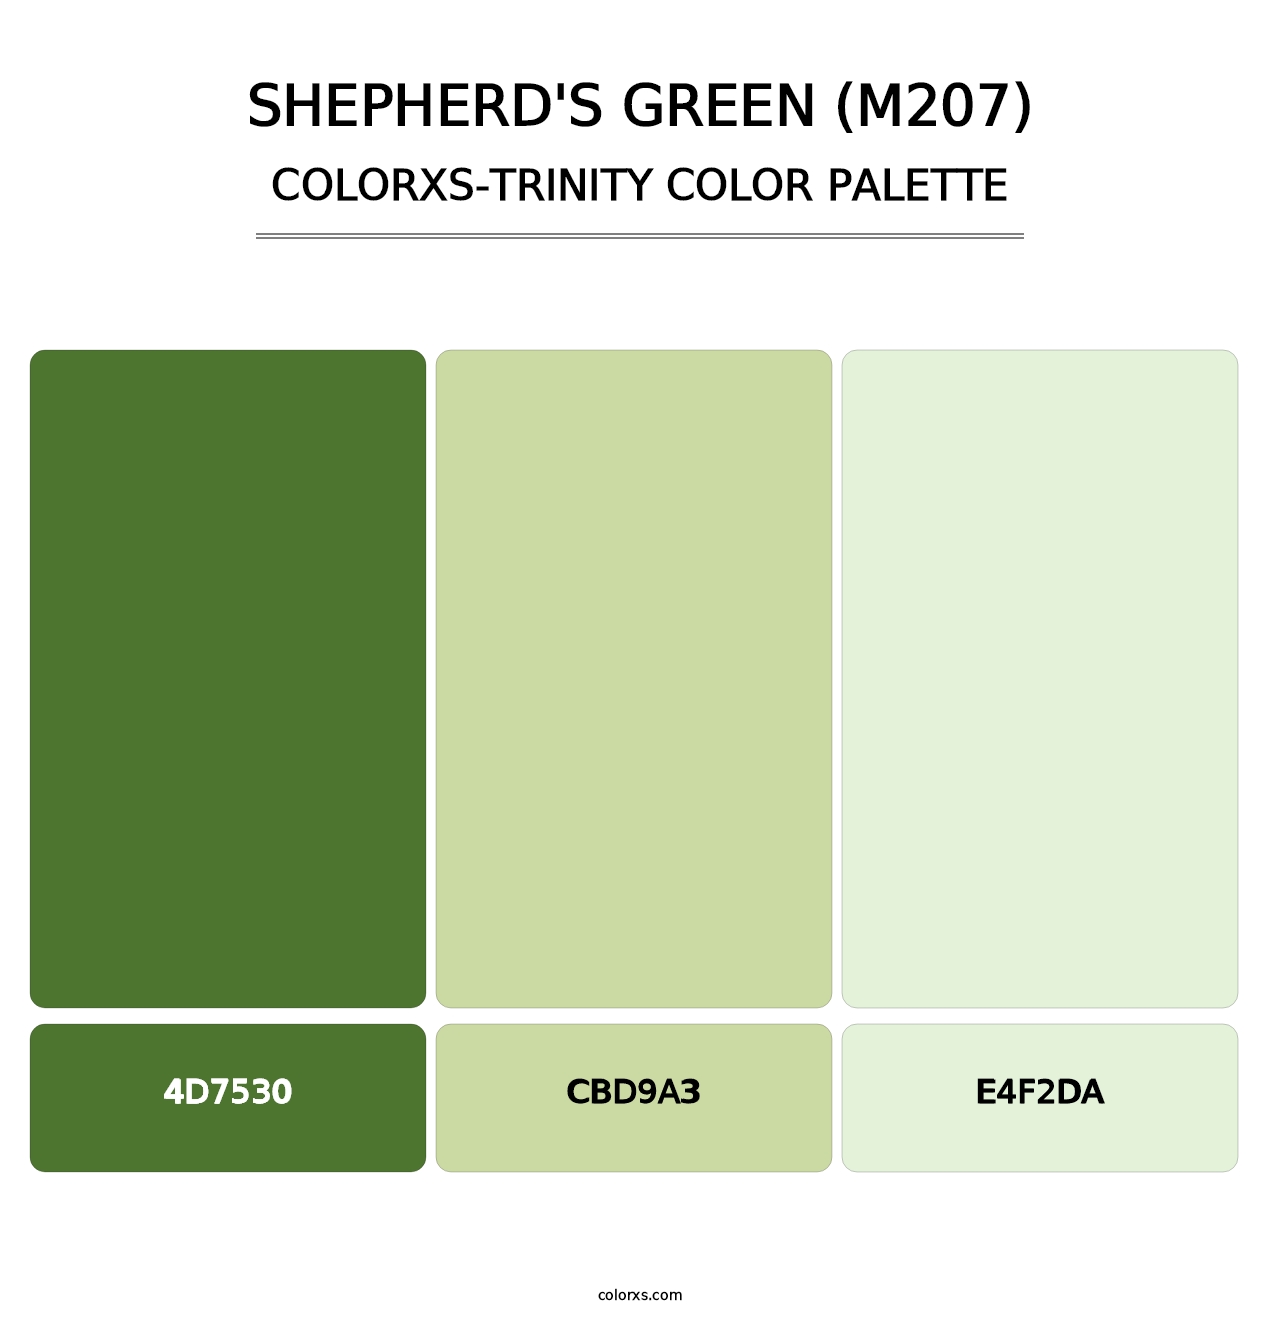 Shepherd's Green (M207) - Colorxs Trinity Palette